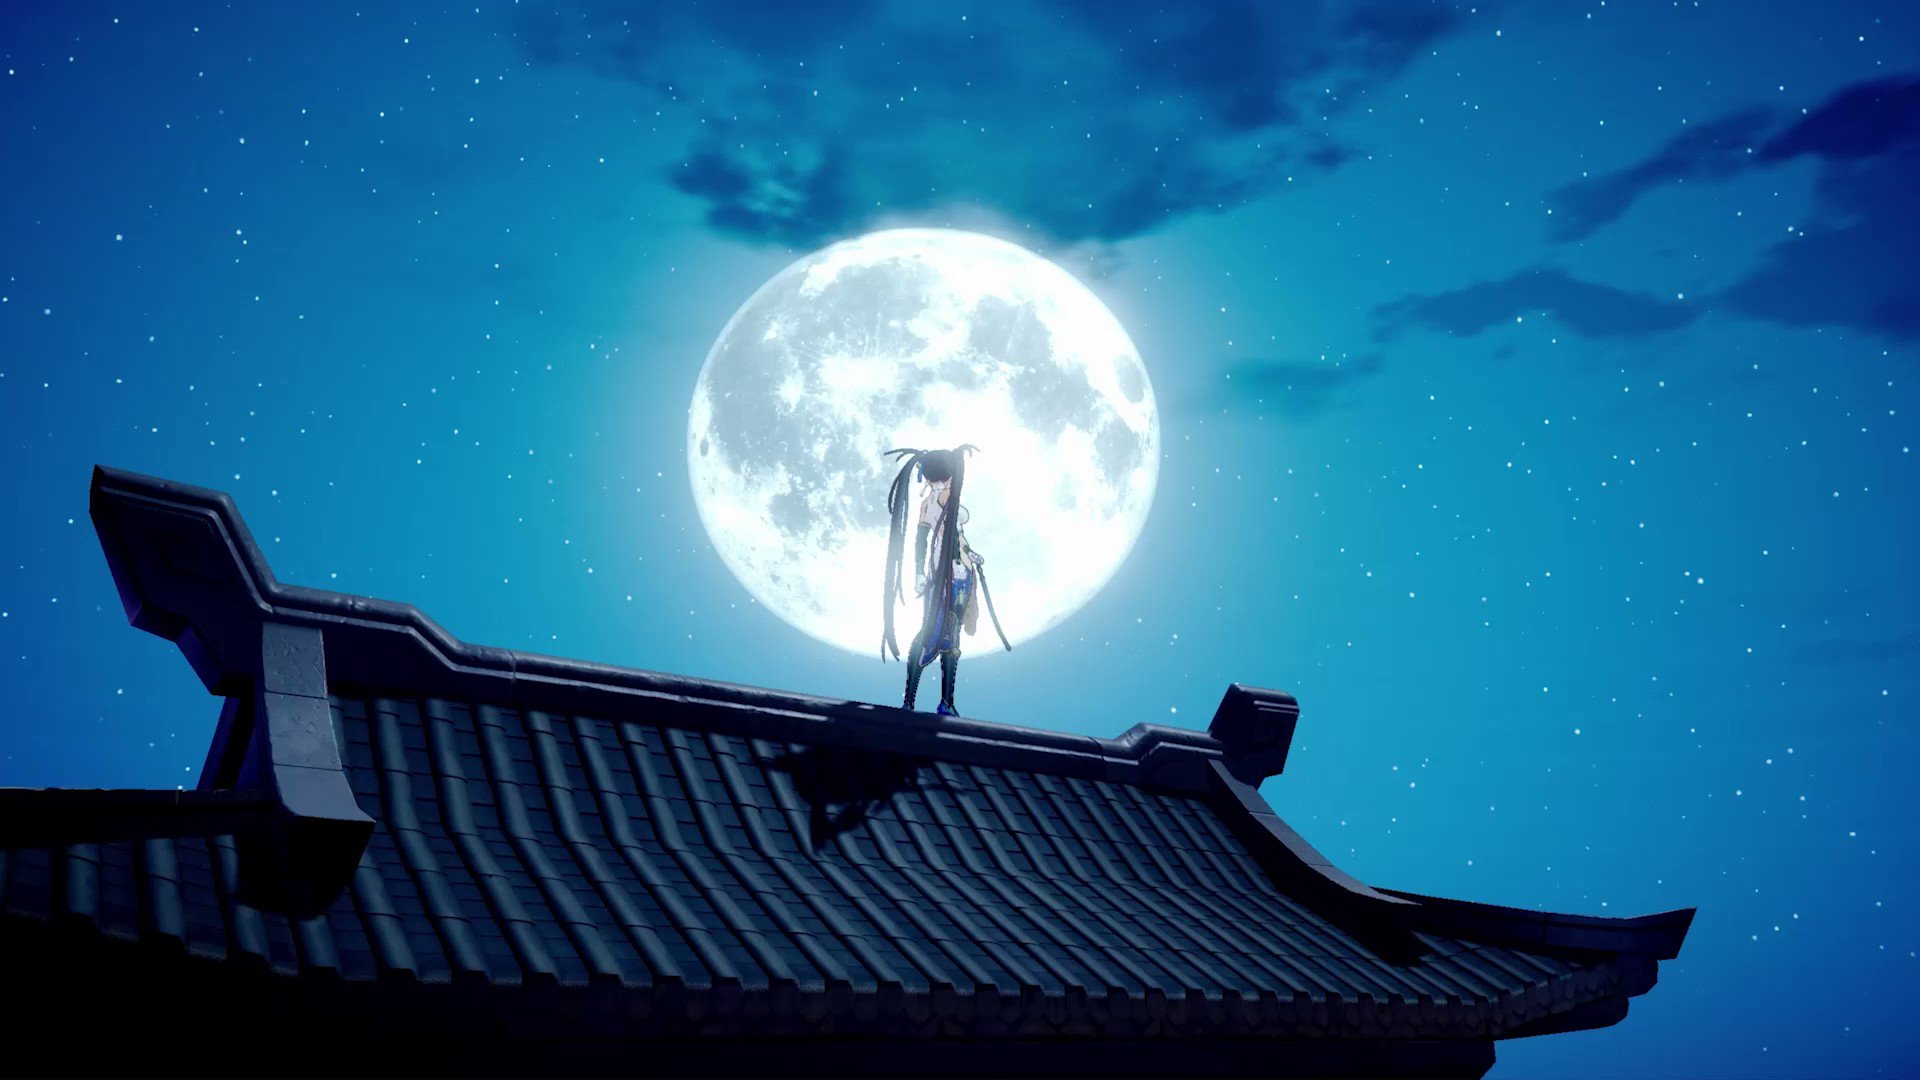 Honkai: anime characters on Star Rail full moon 4K wallpaper download